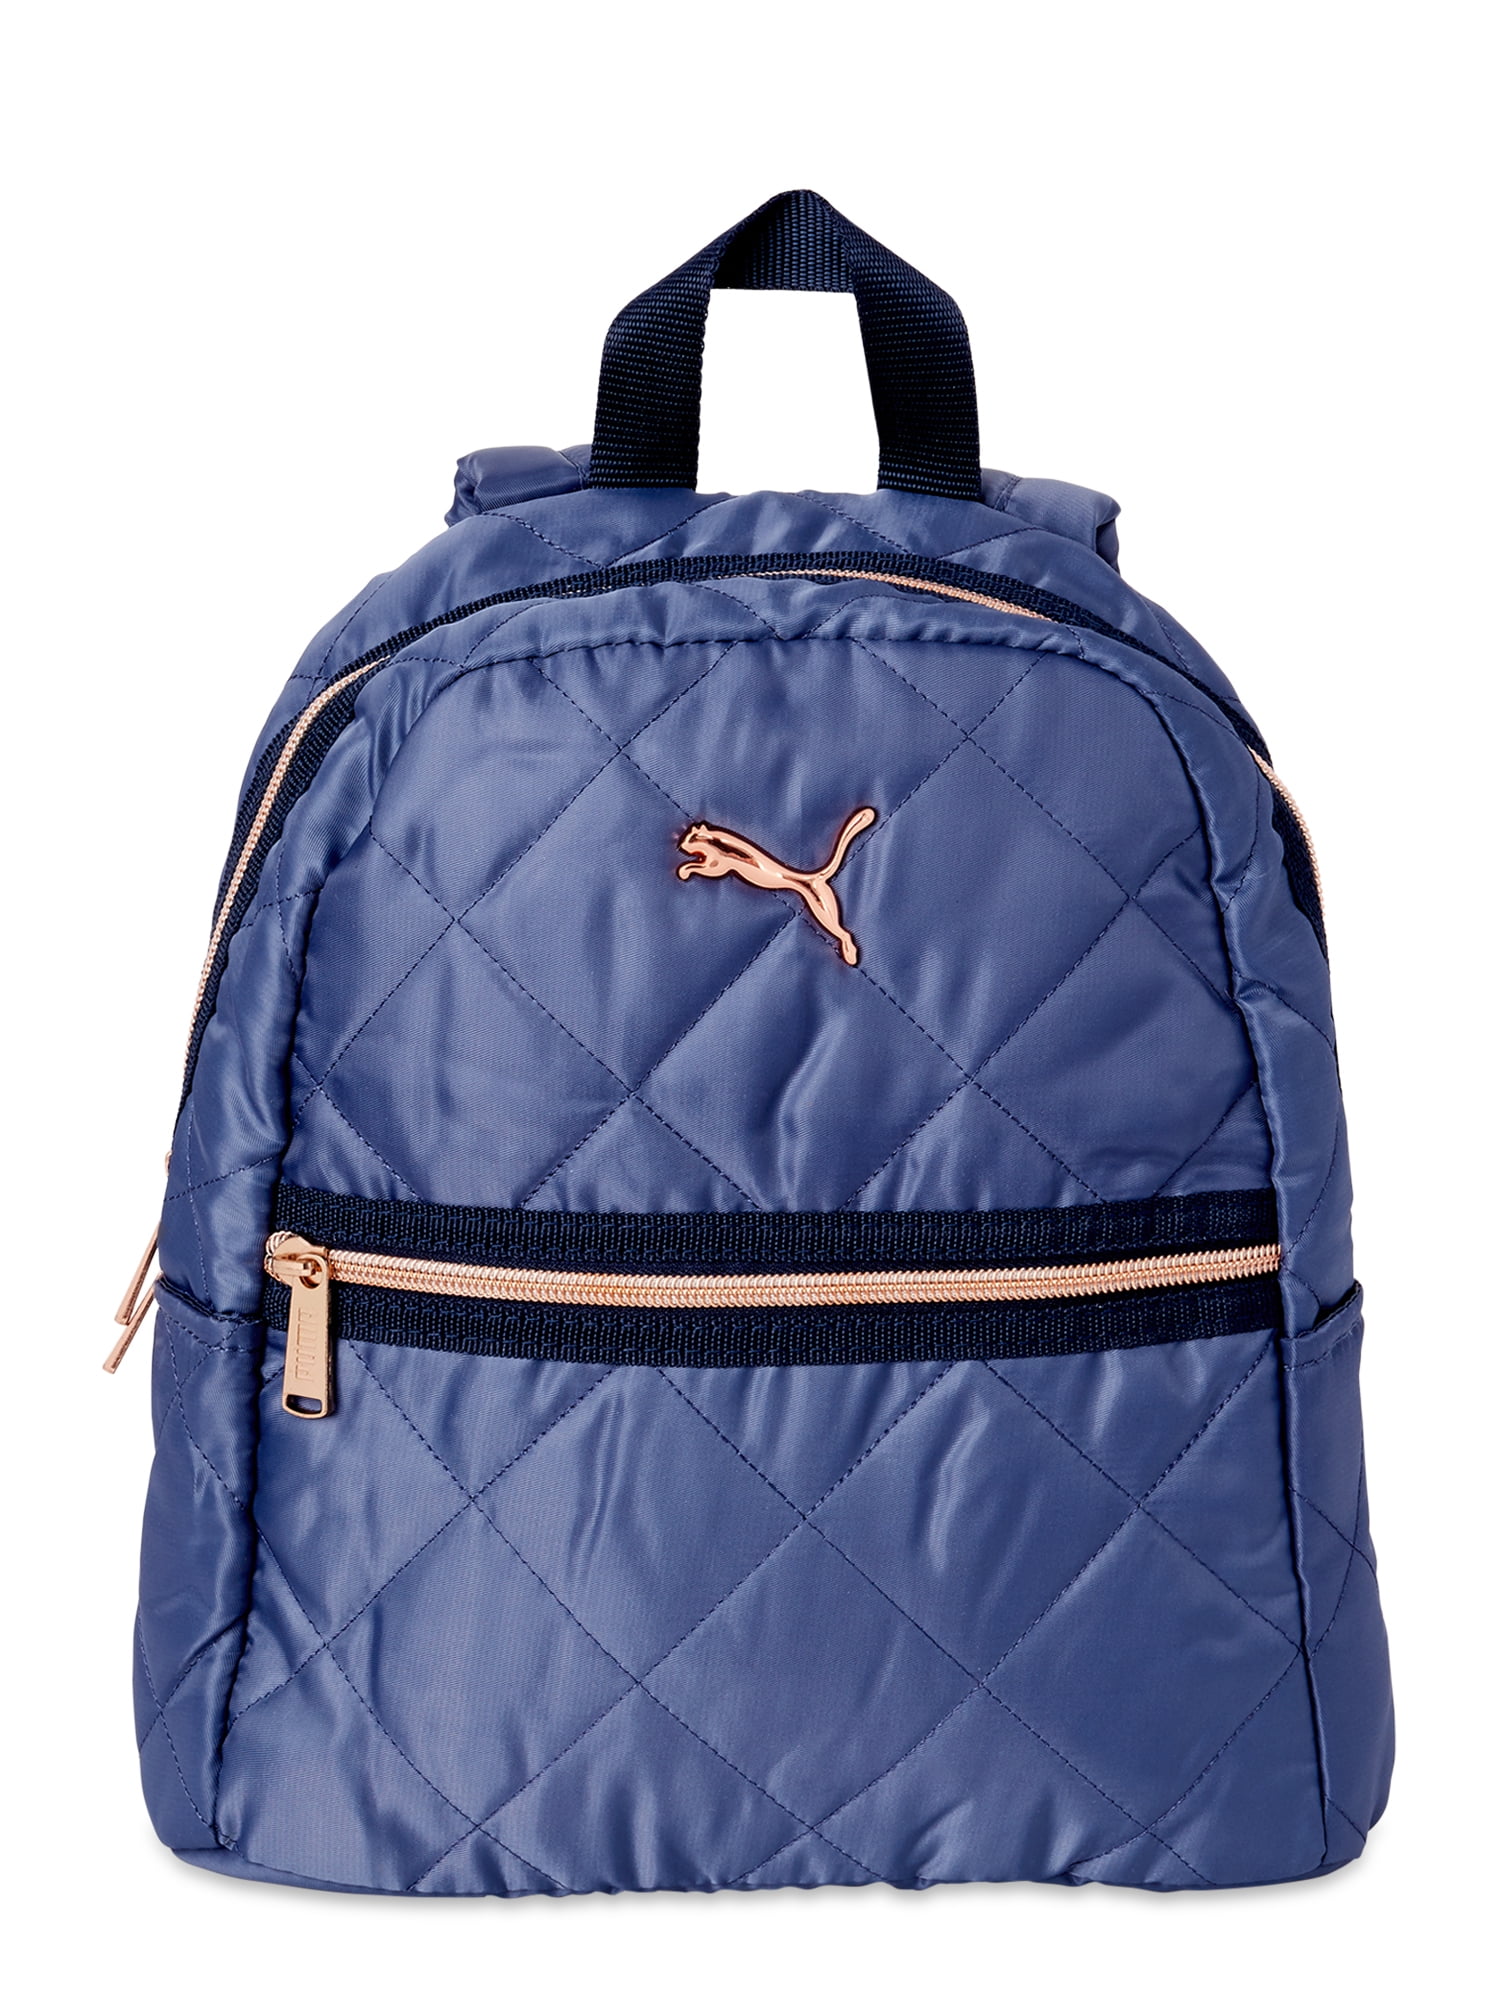 PUMA - PUMA Orbital Mini Backpack, Blue 